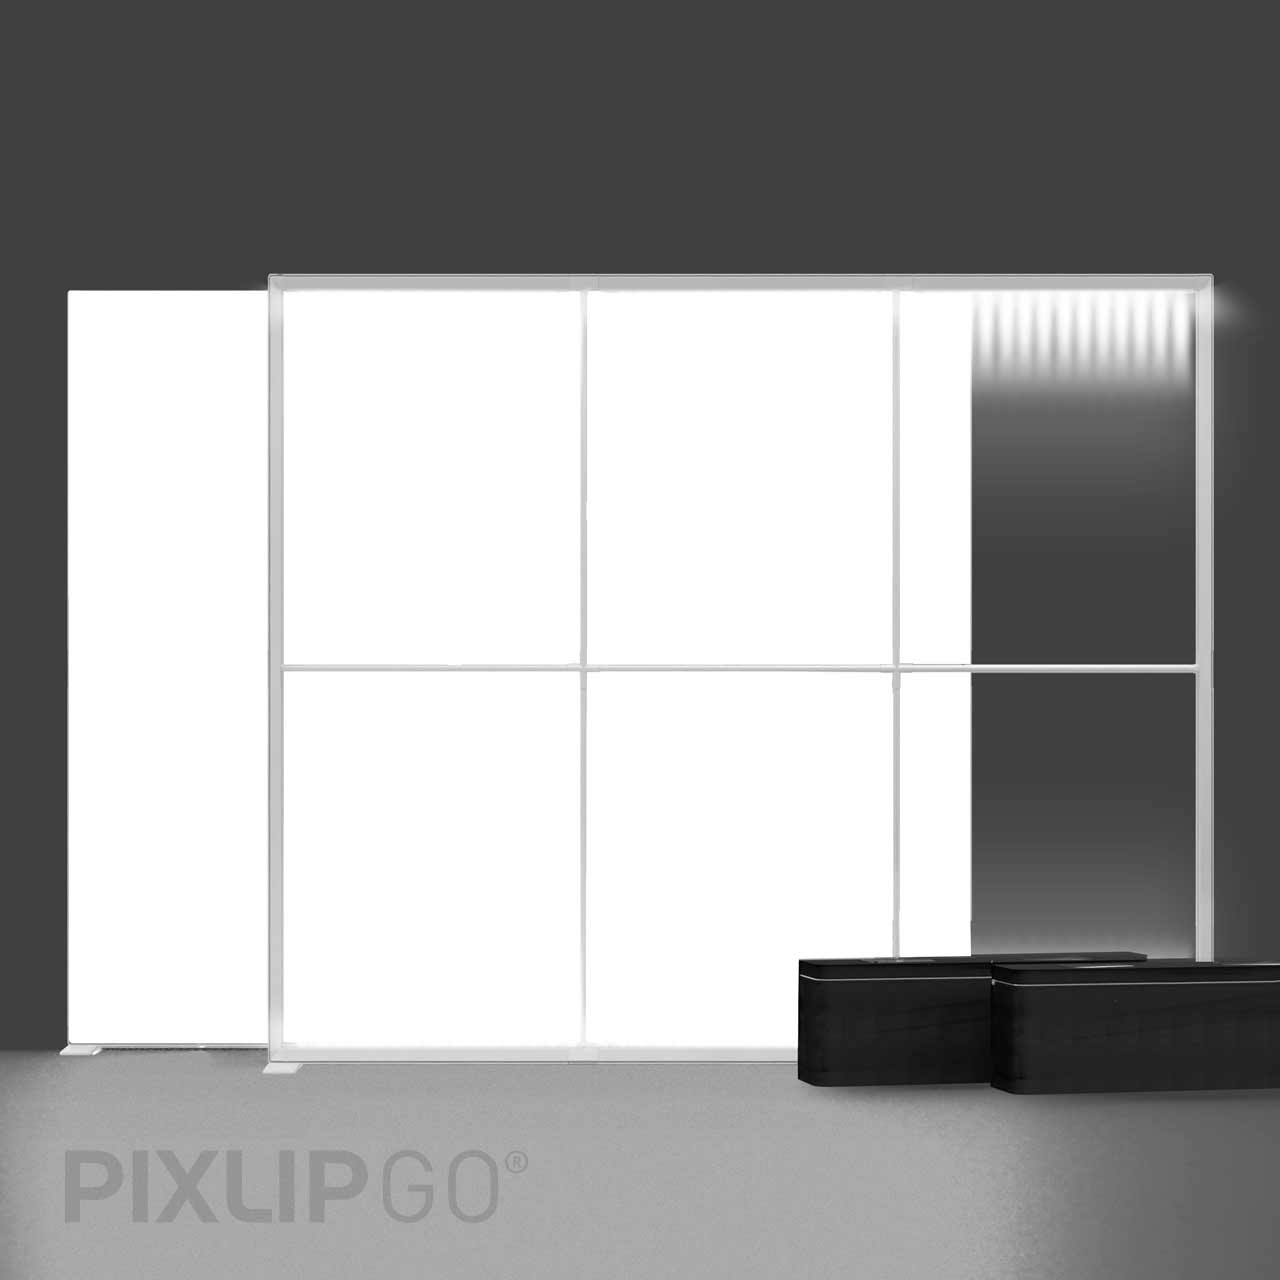 PIXLIP GO Lightbox Set 300 x 225 cm